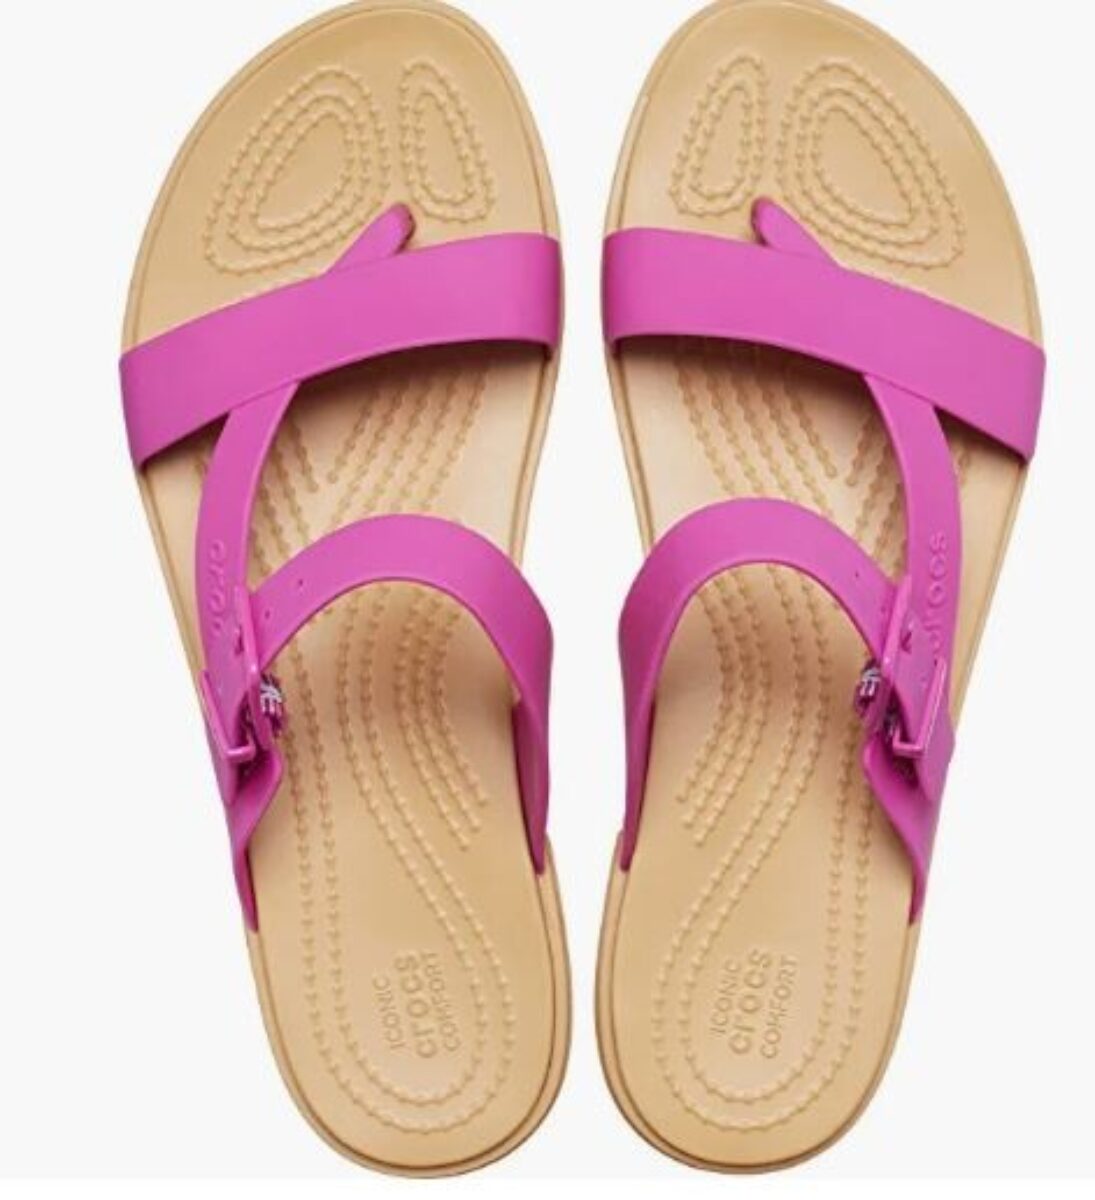 Alea's Deals Crocs Women's Tulum Toe Post Sandals-62% off  